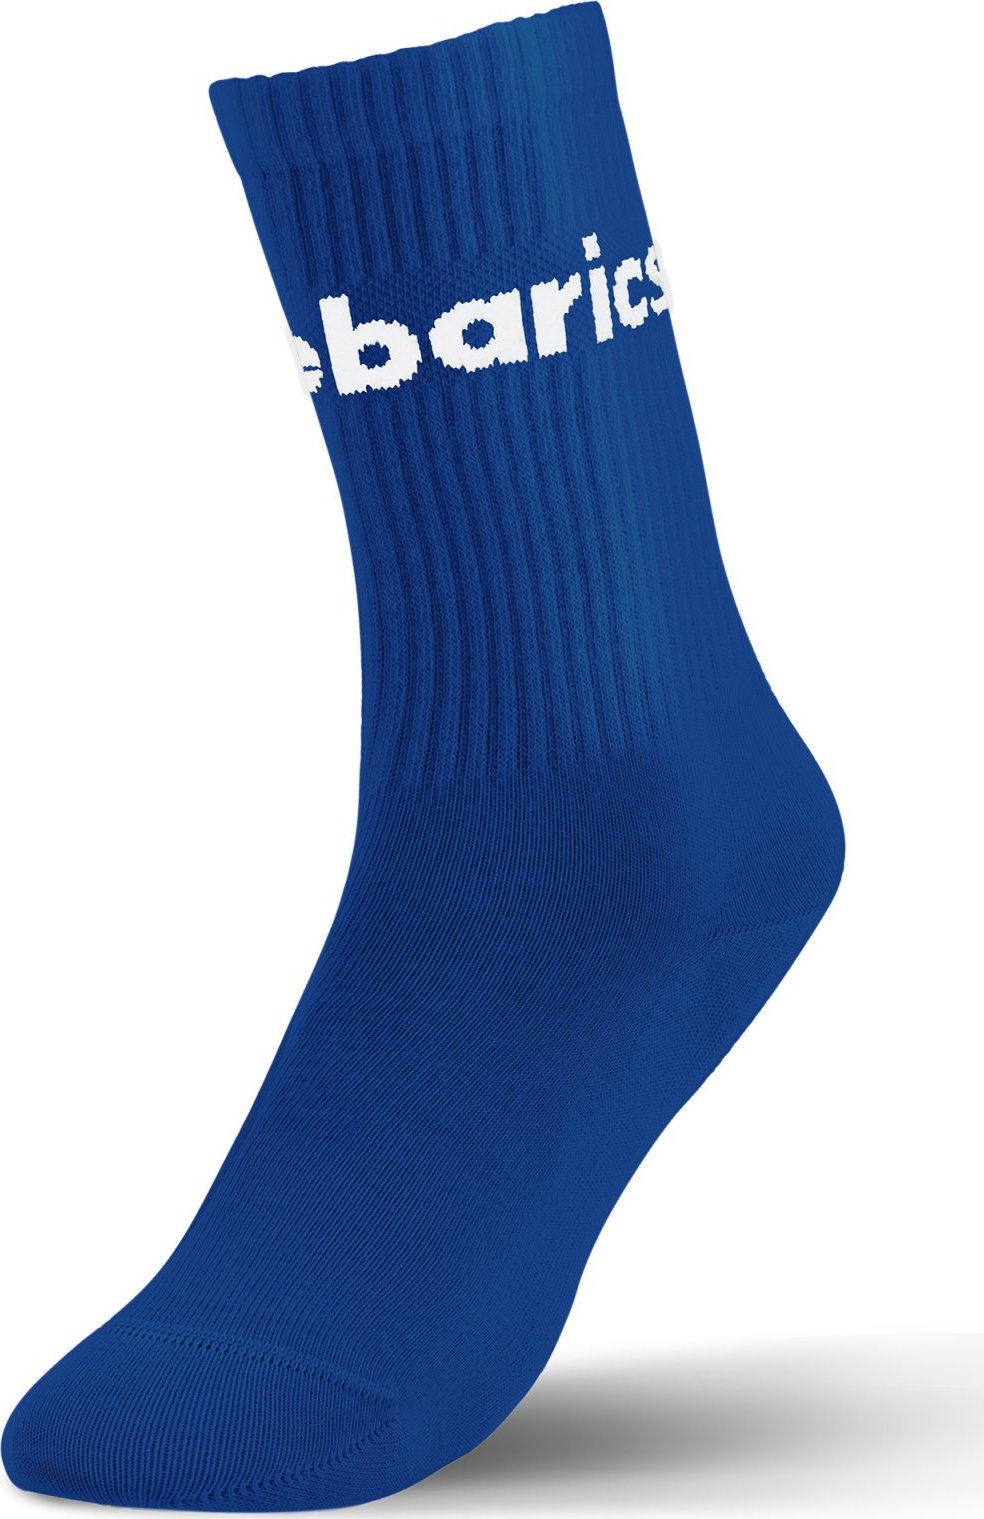 Barefootové ponožky Barebarics Crew modrá Big logo Velikost: 35-38